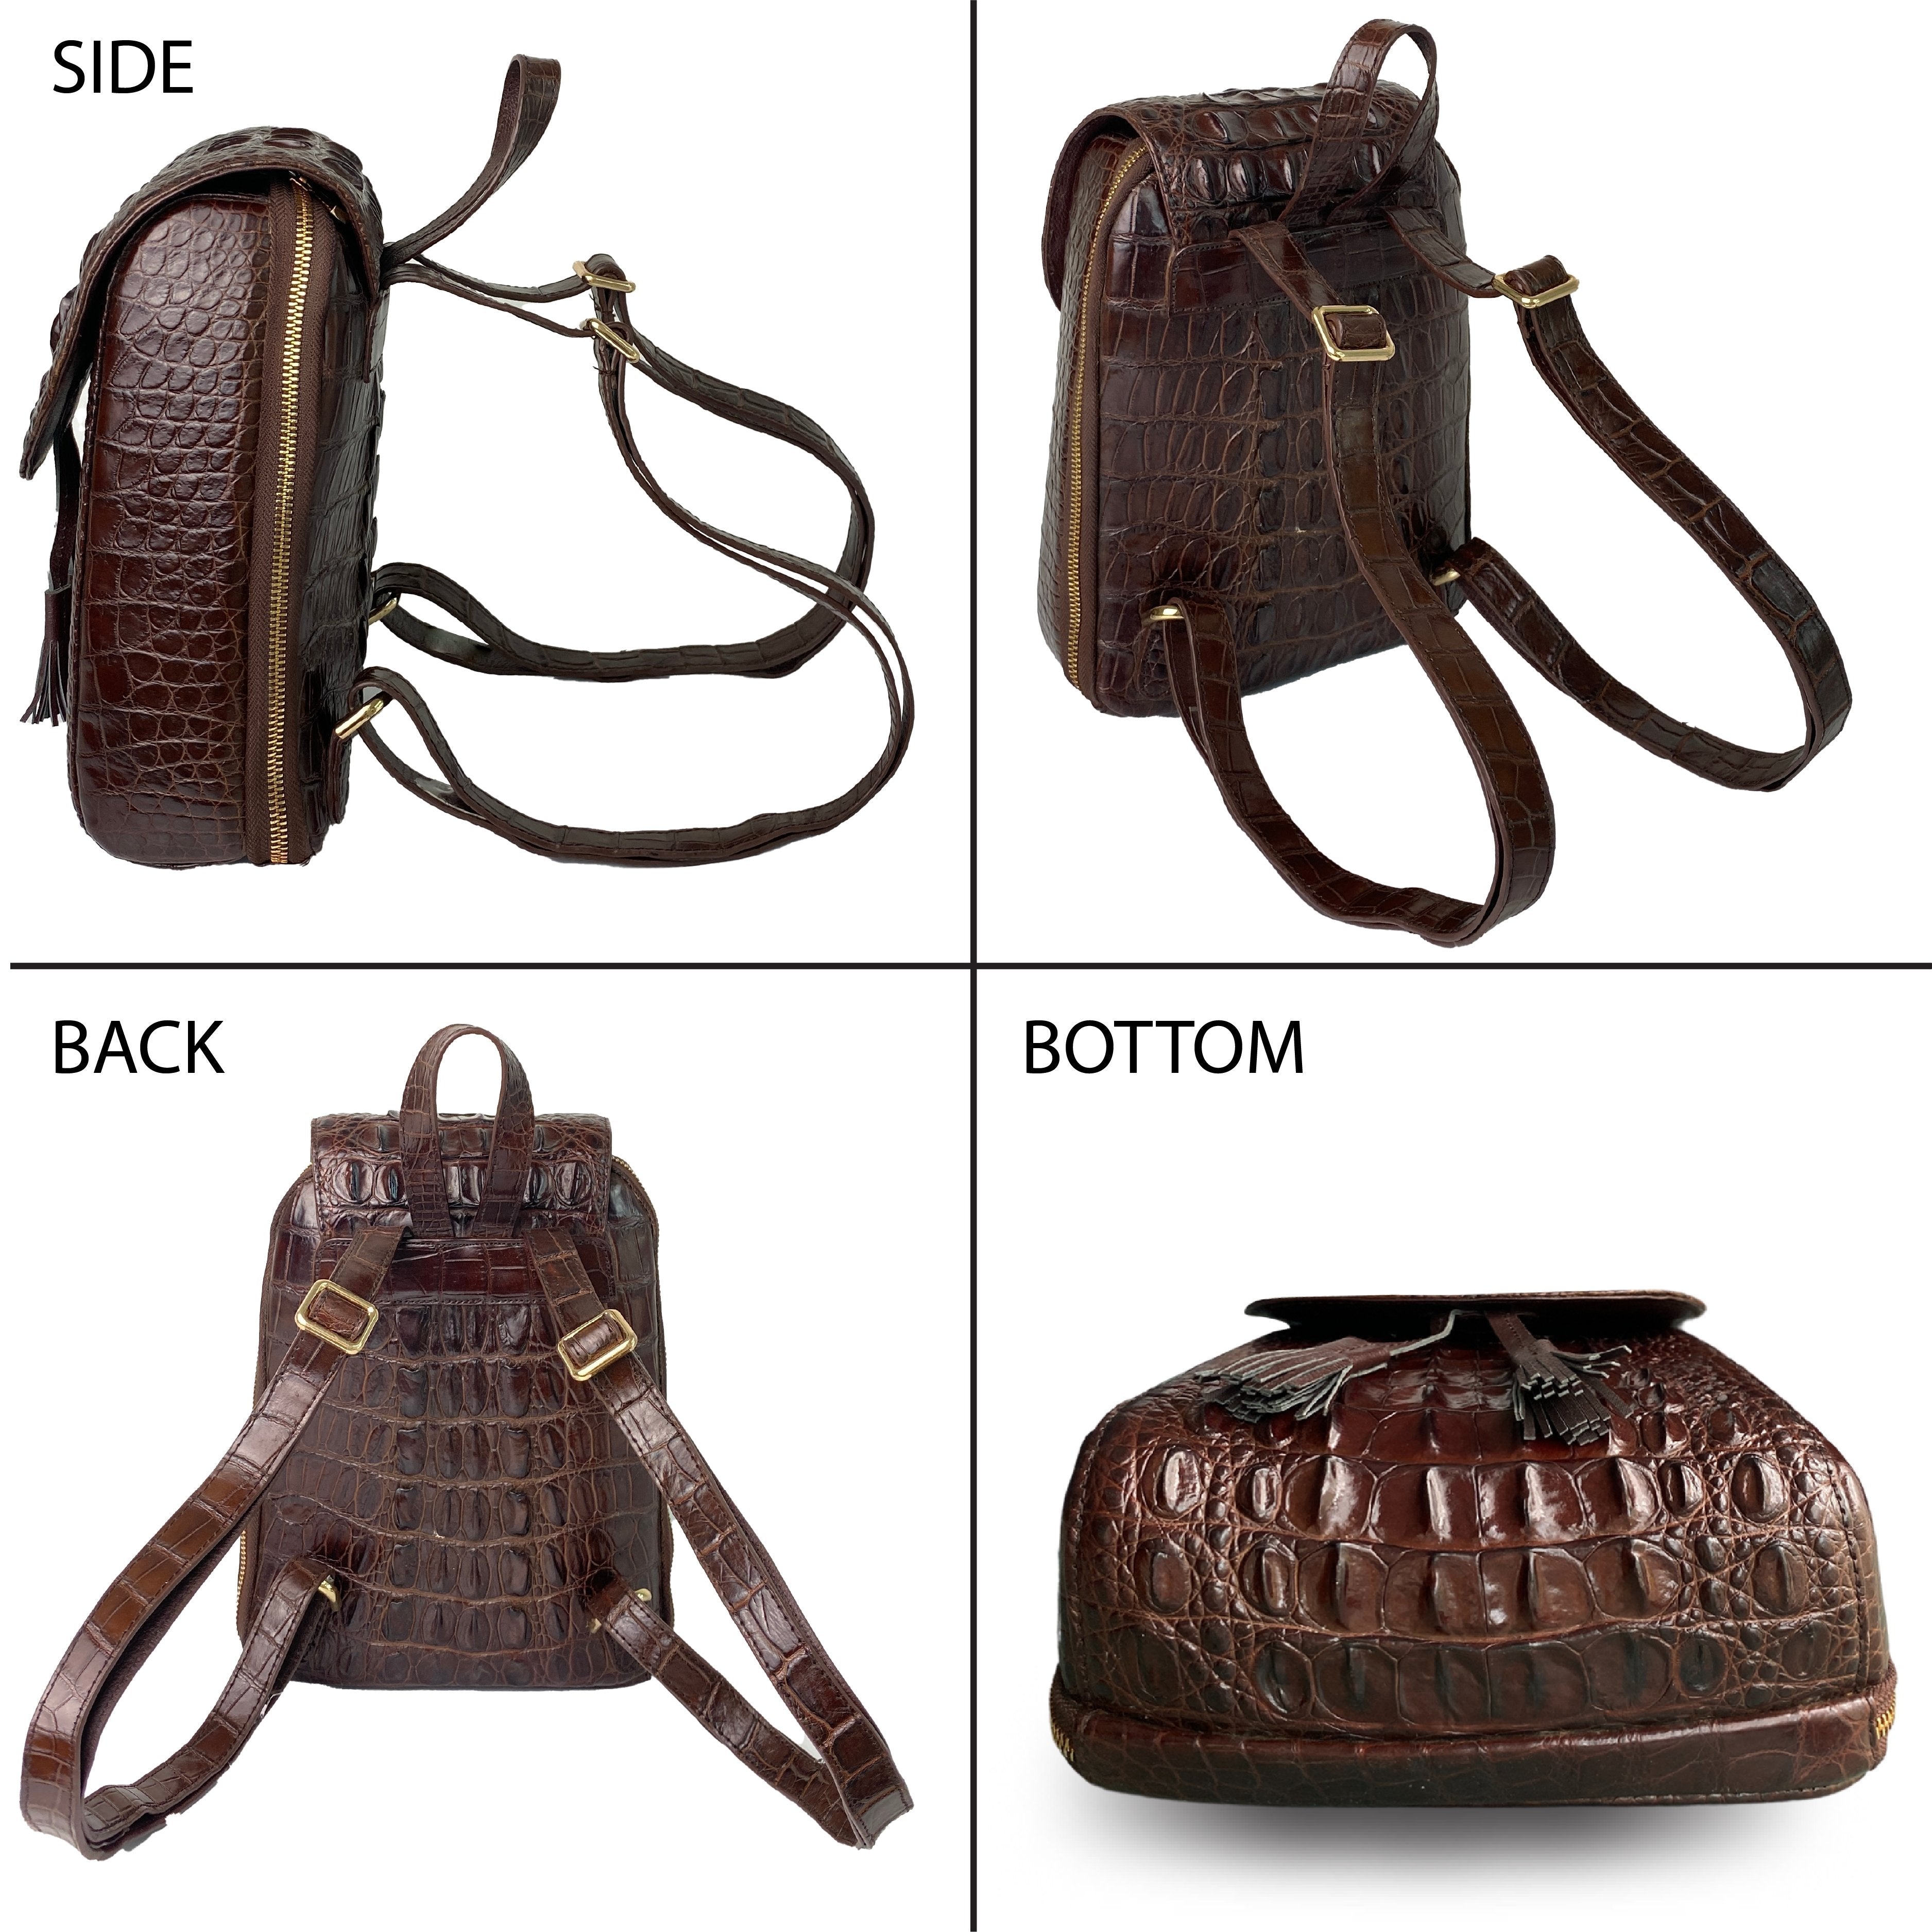 Brown Alligator Leather Backpack Rucksack Women, Small Unique Bag Christmas Gift For Women - Vinacreations